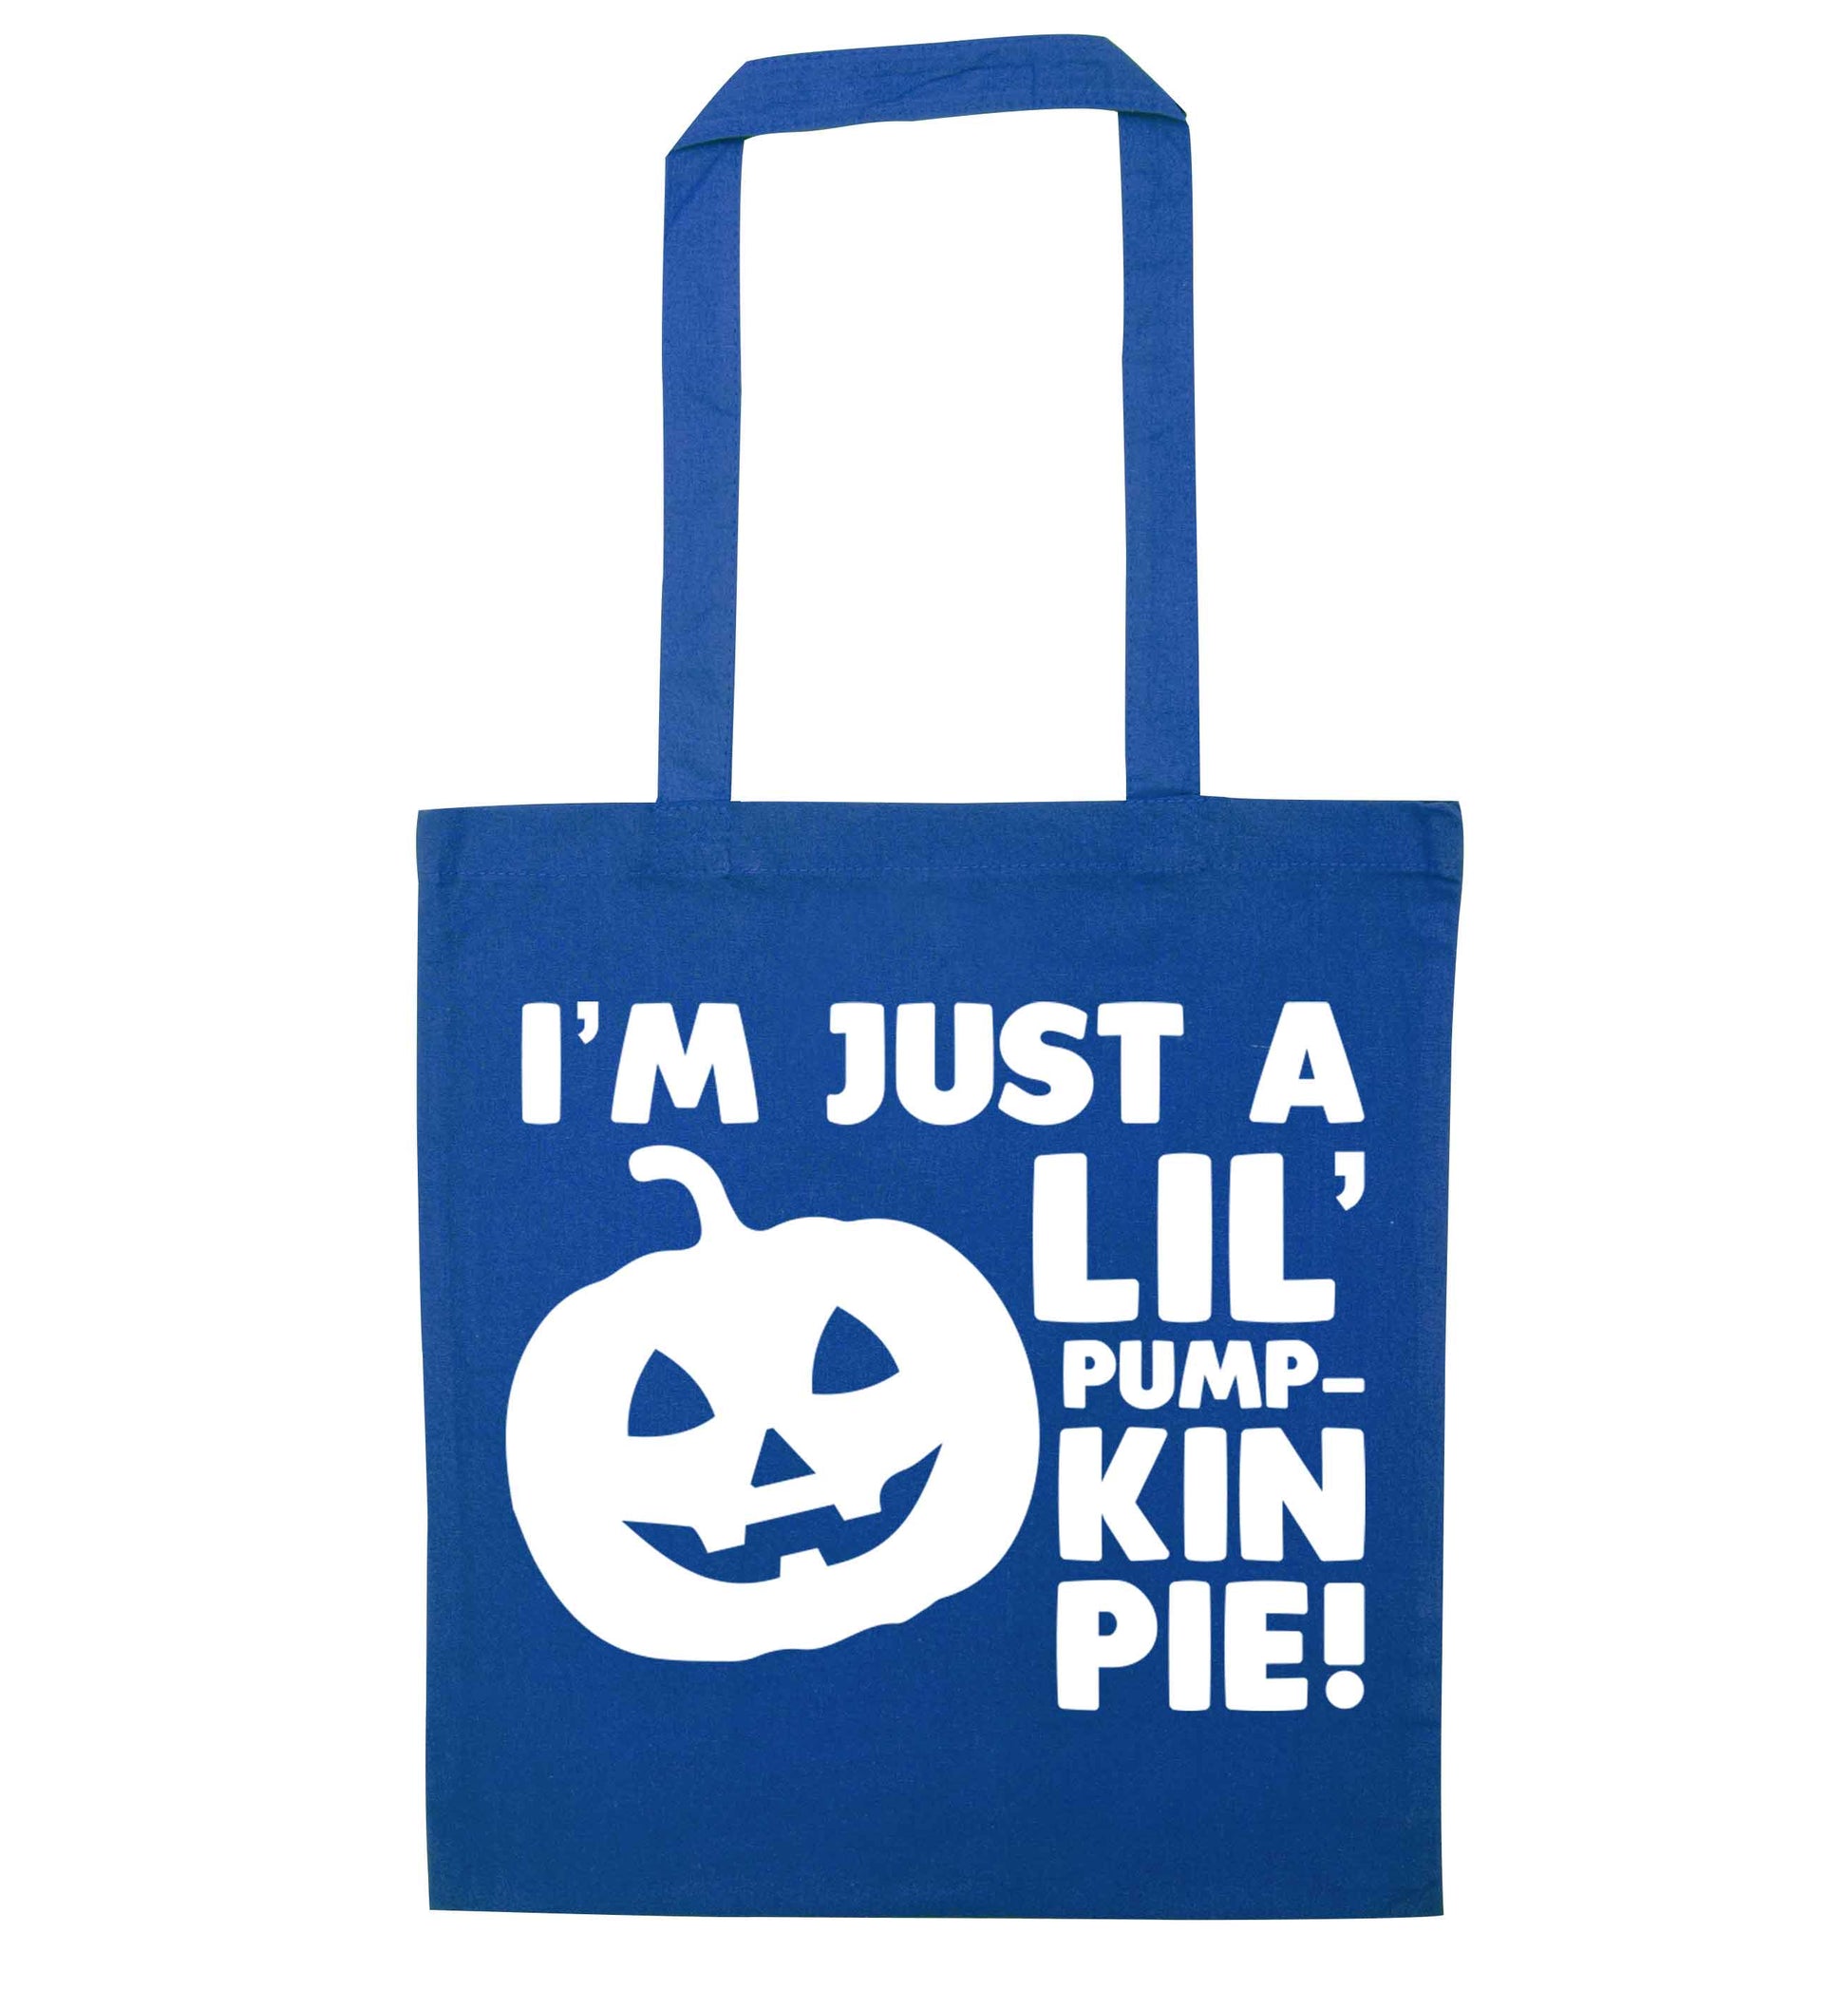 I'm just a lil' pumpkin pie blue tote bag